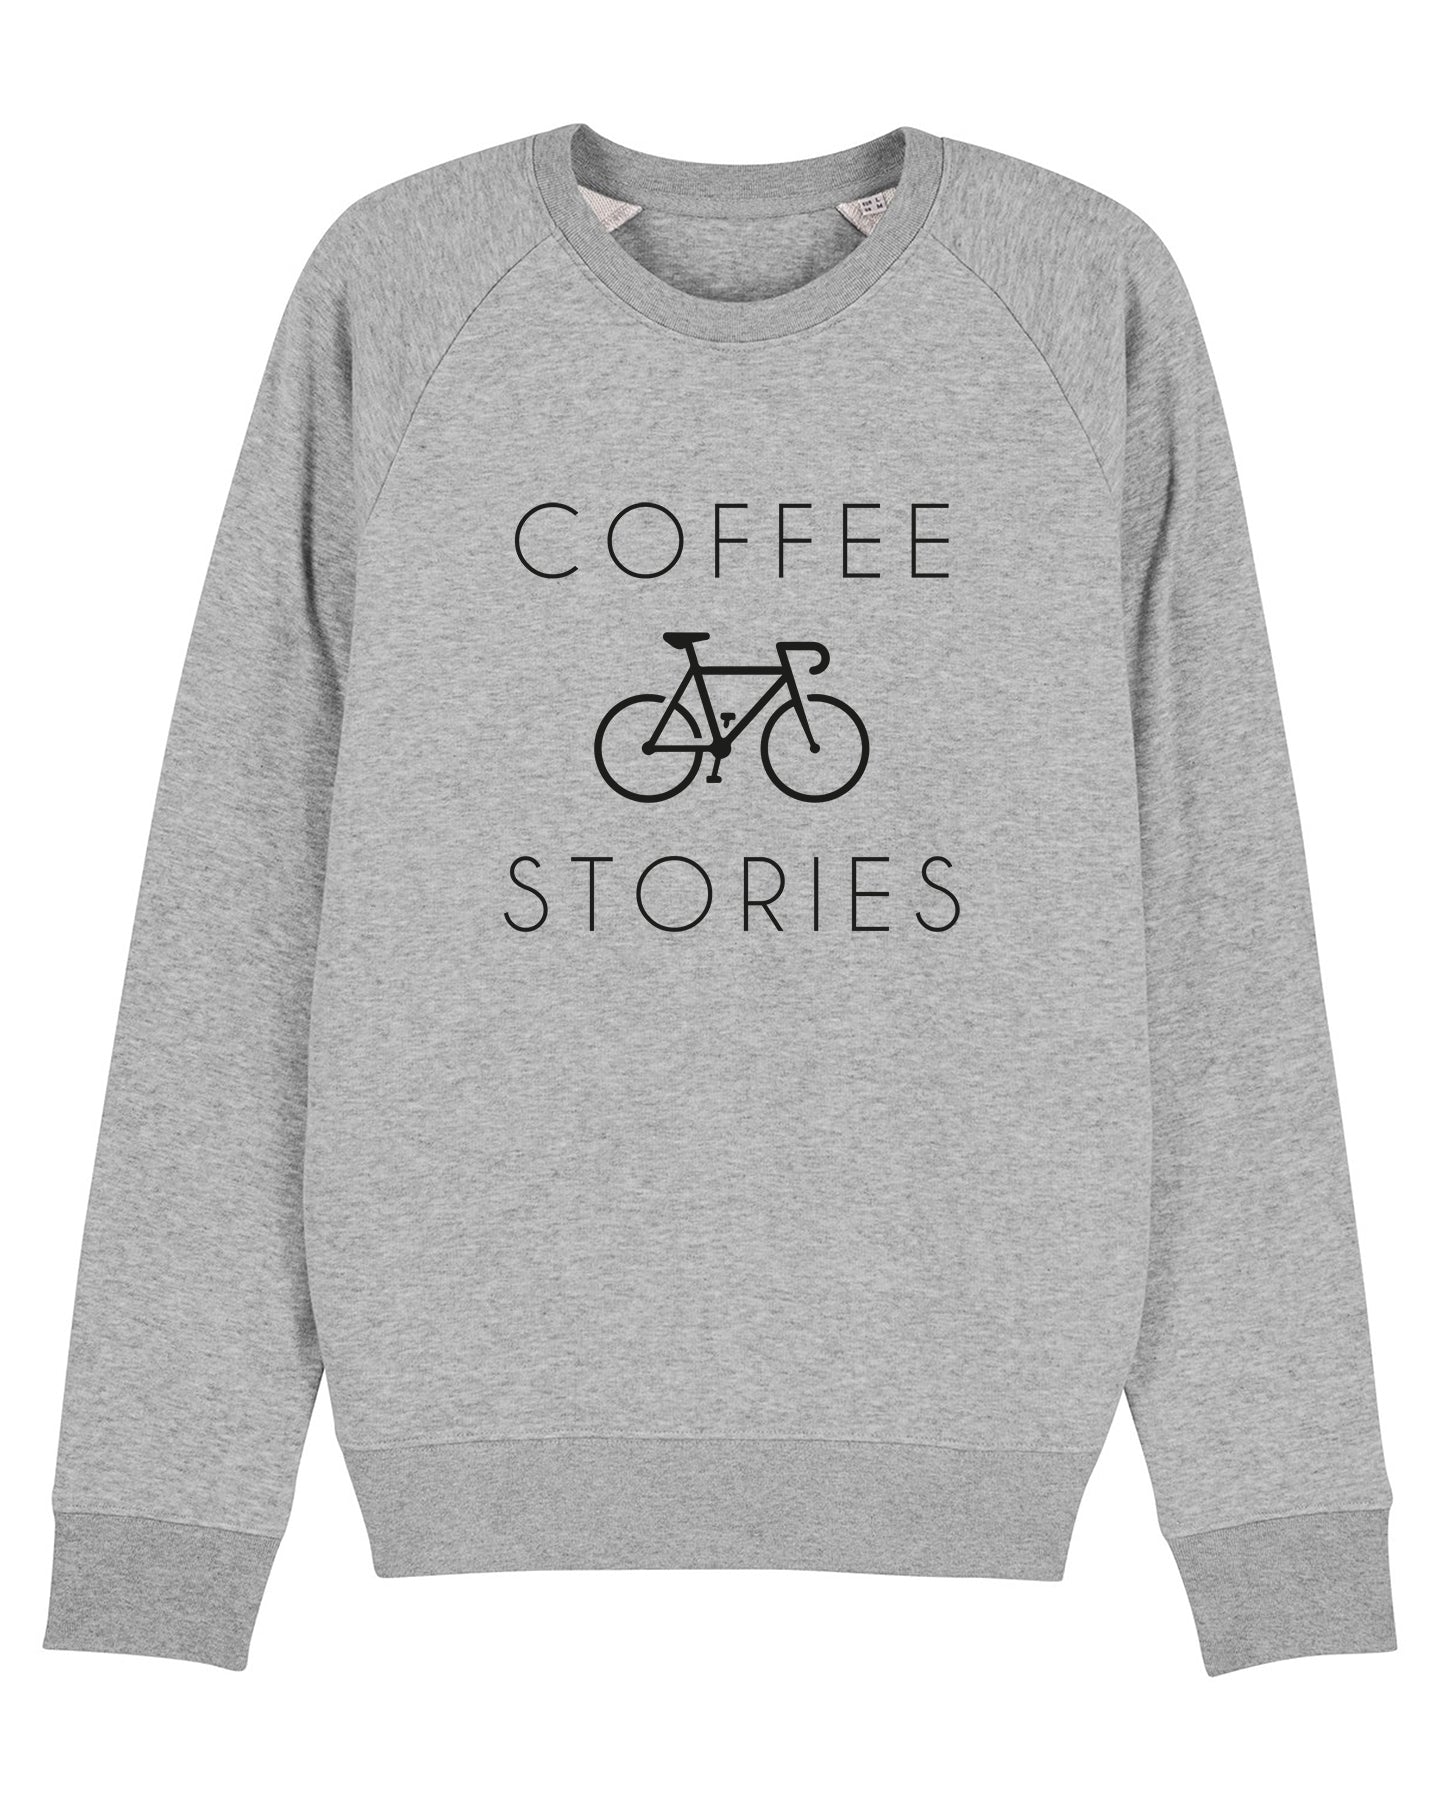 Coffee - Bike - Stories Women Sweater